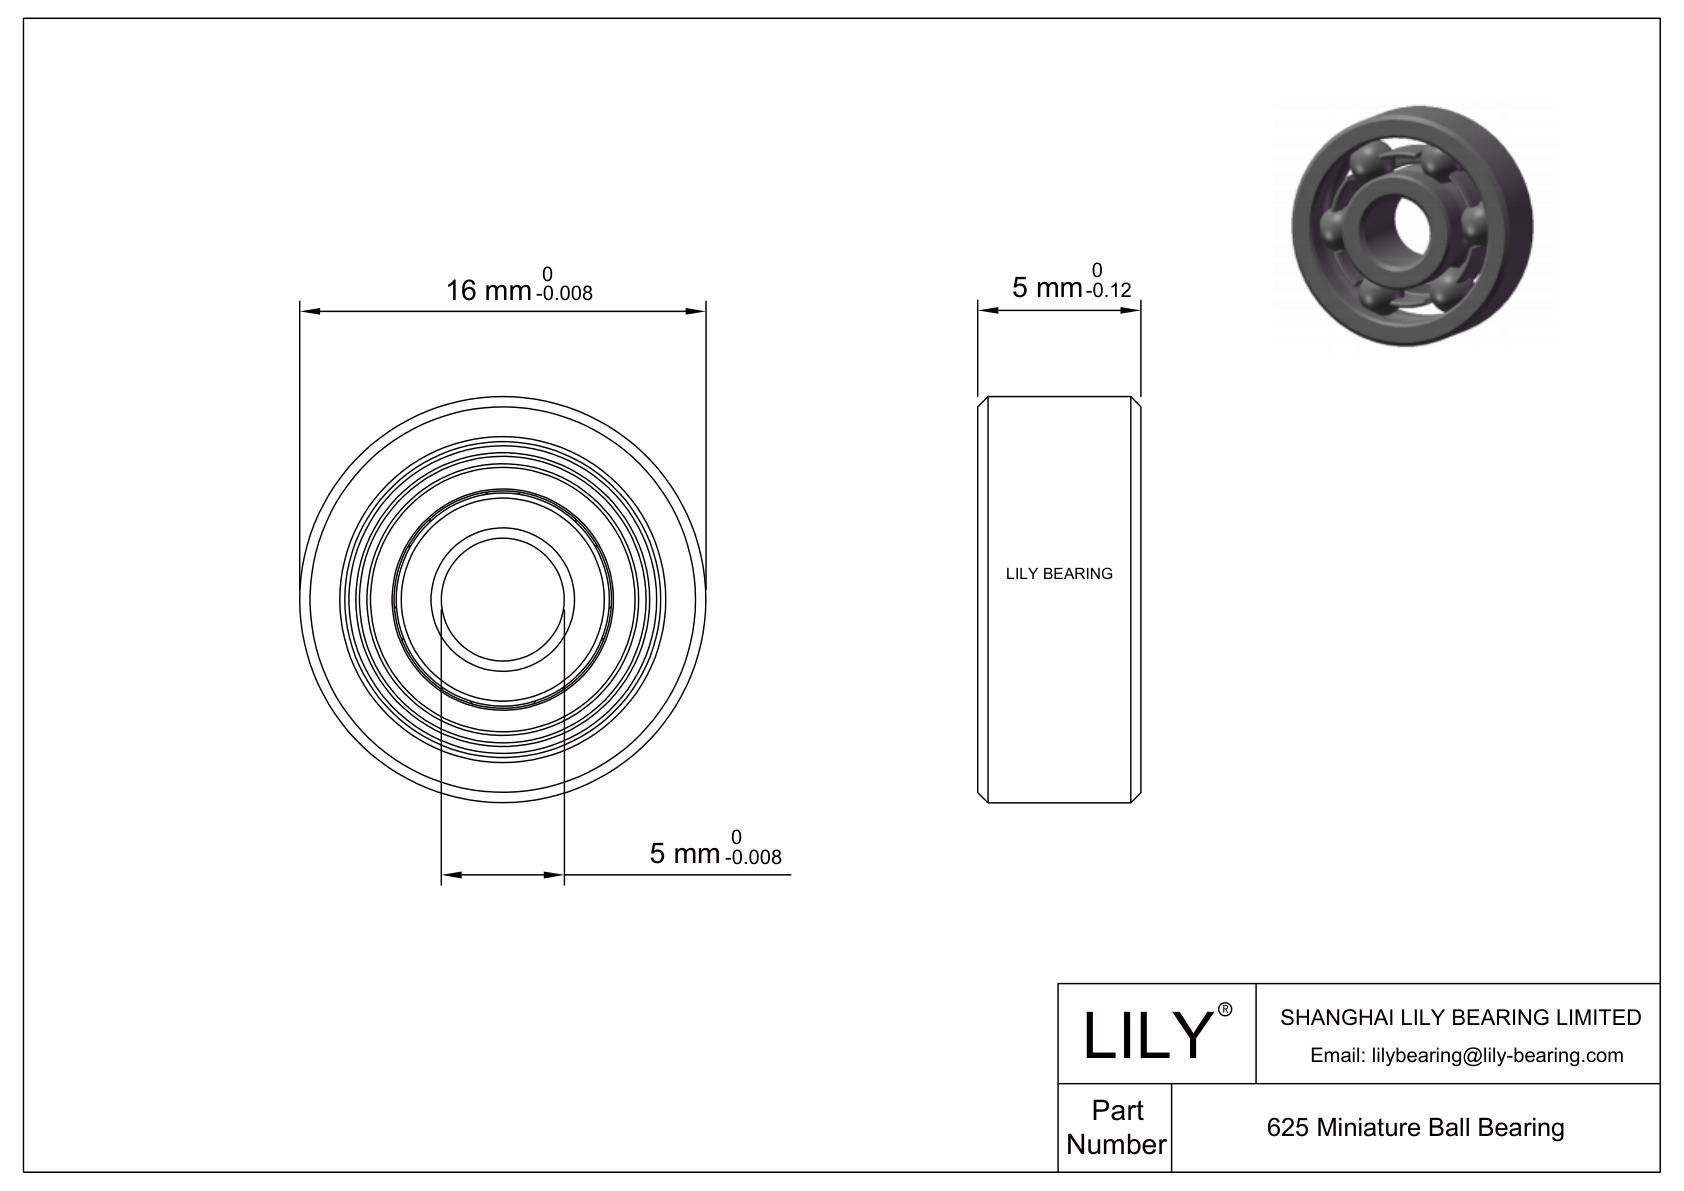 LILY-PU62524-5 Polyurethane Coated Bearing cad drawing